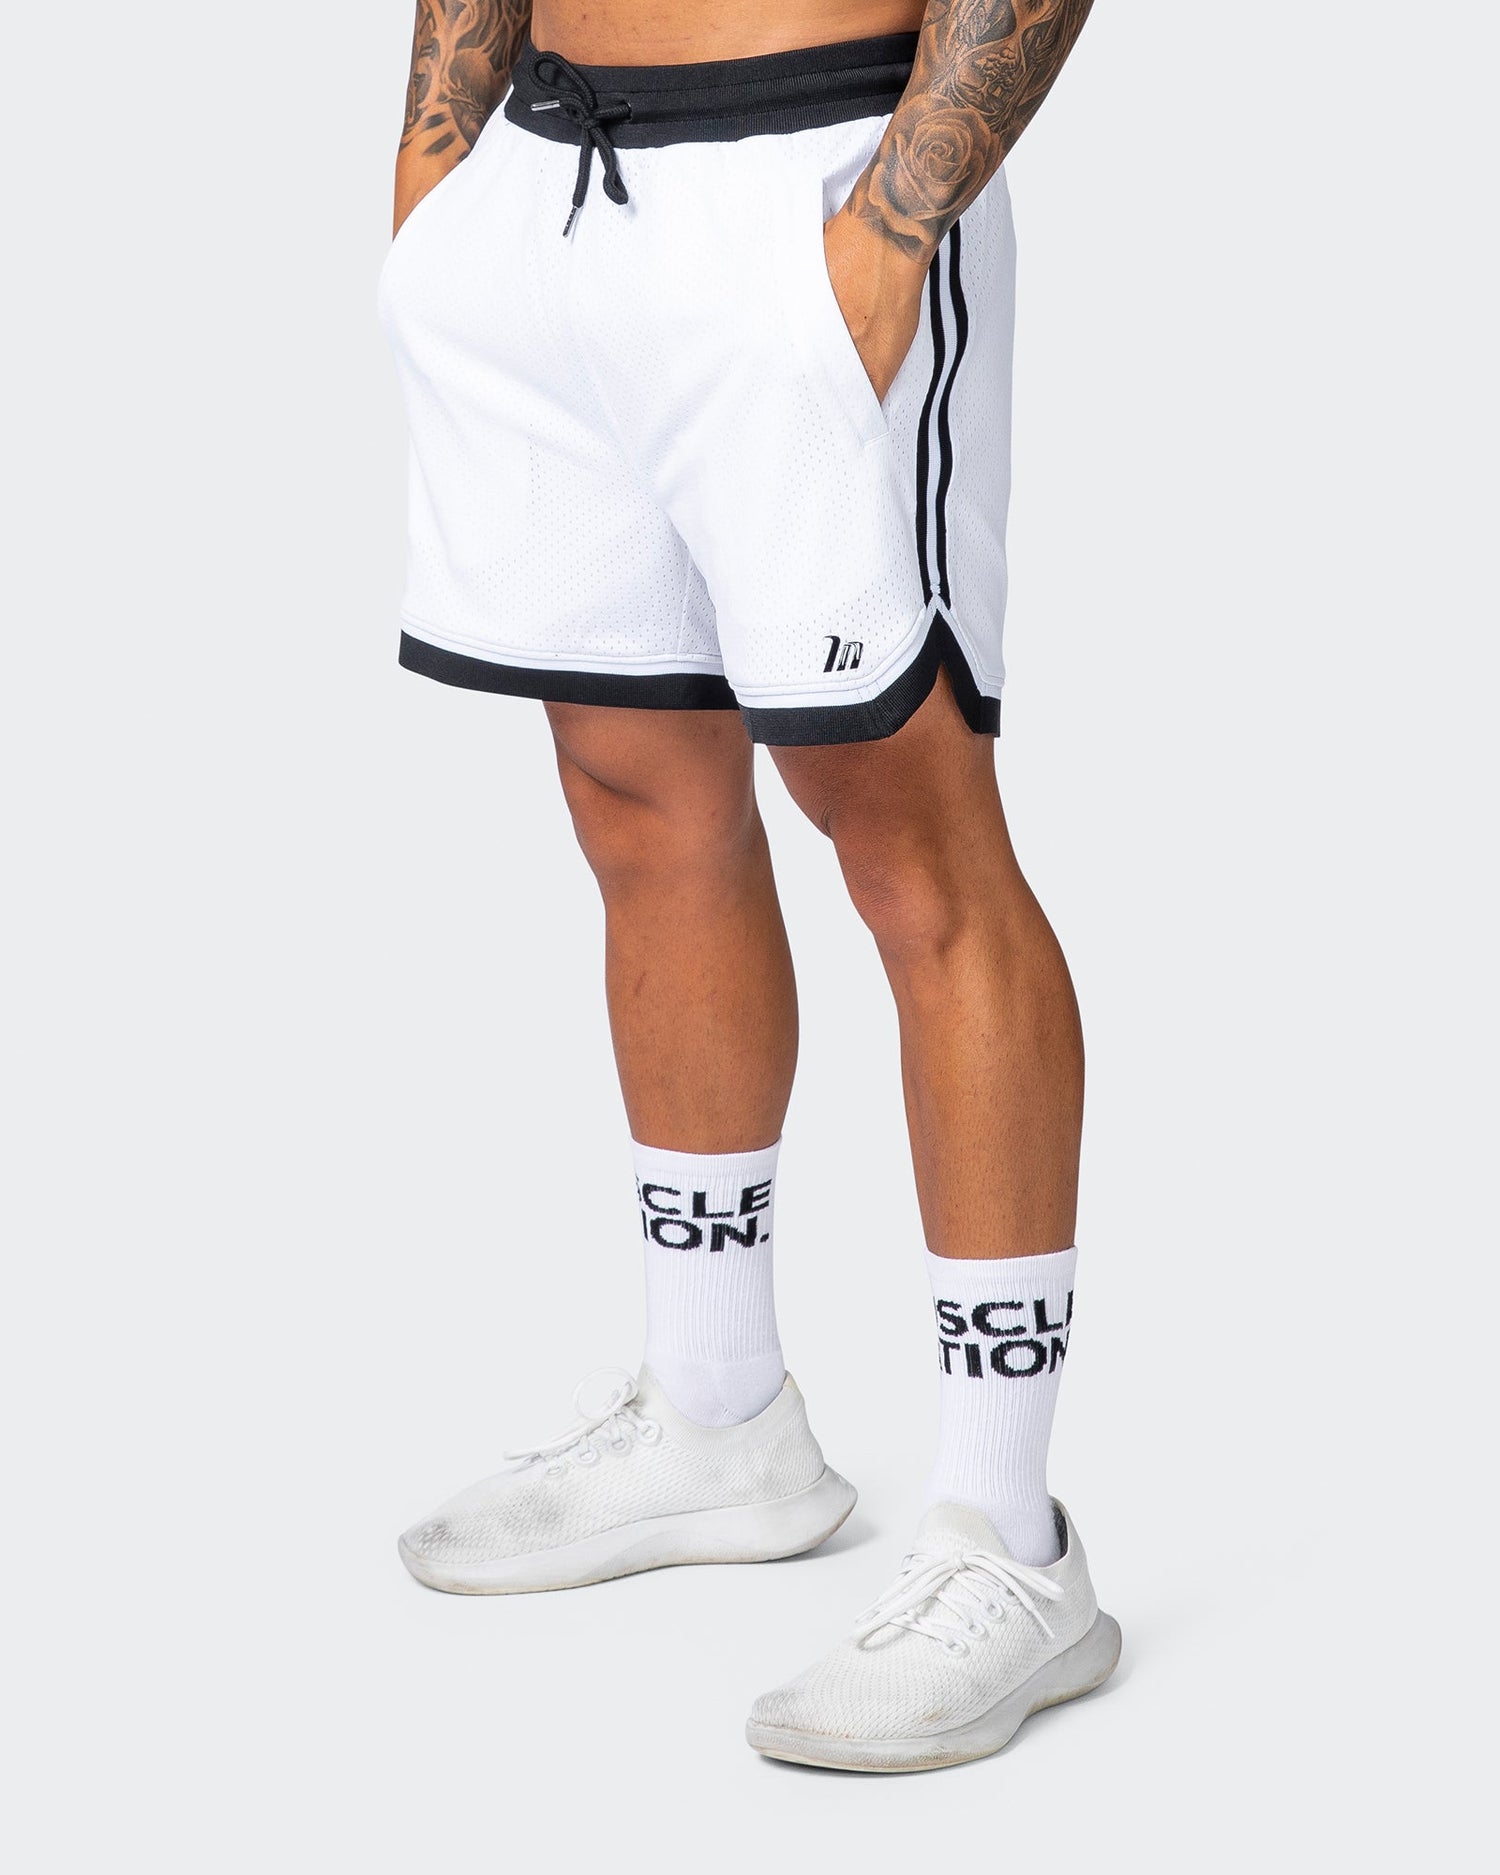 Mens 5" Basketball Shorts - White